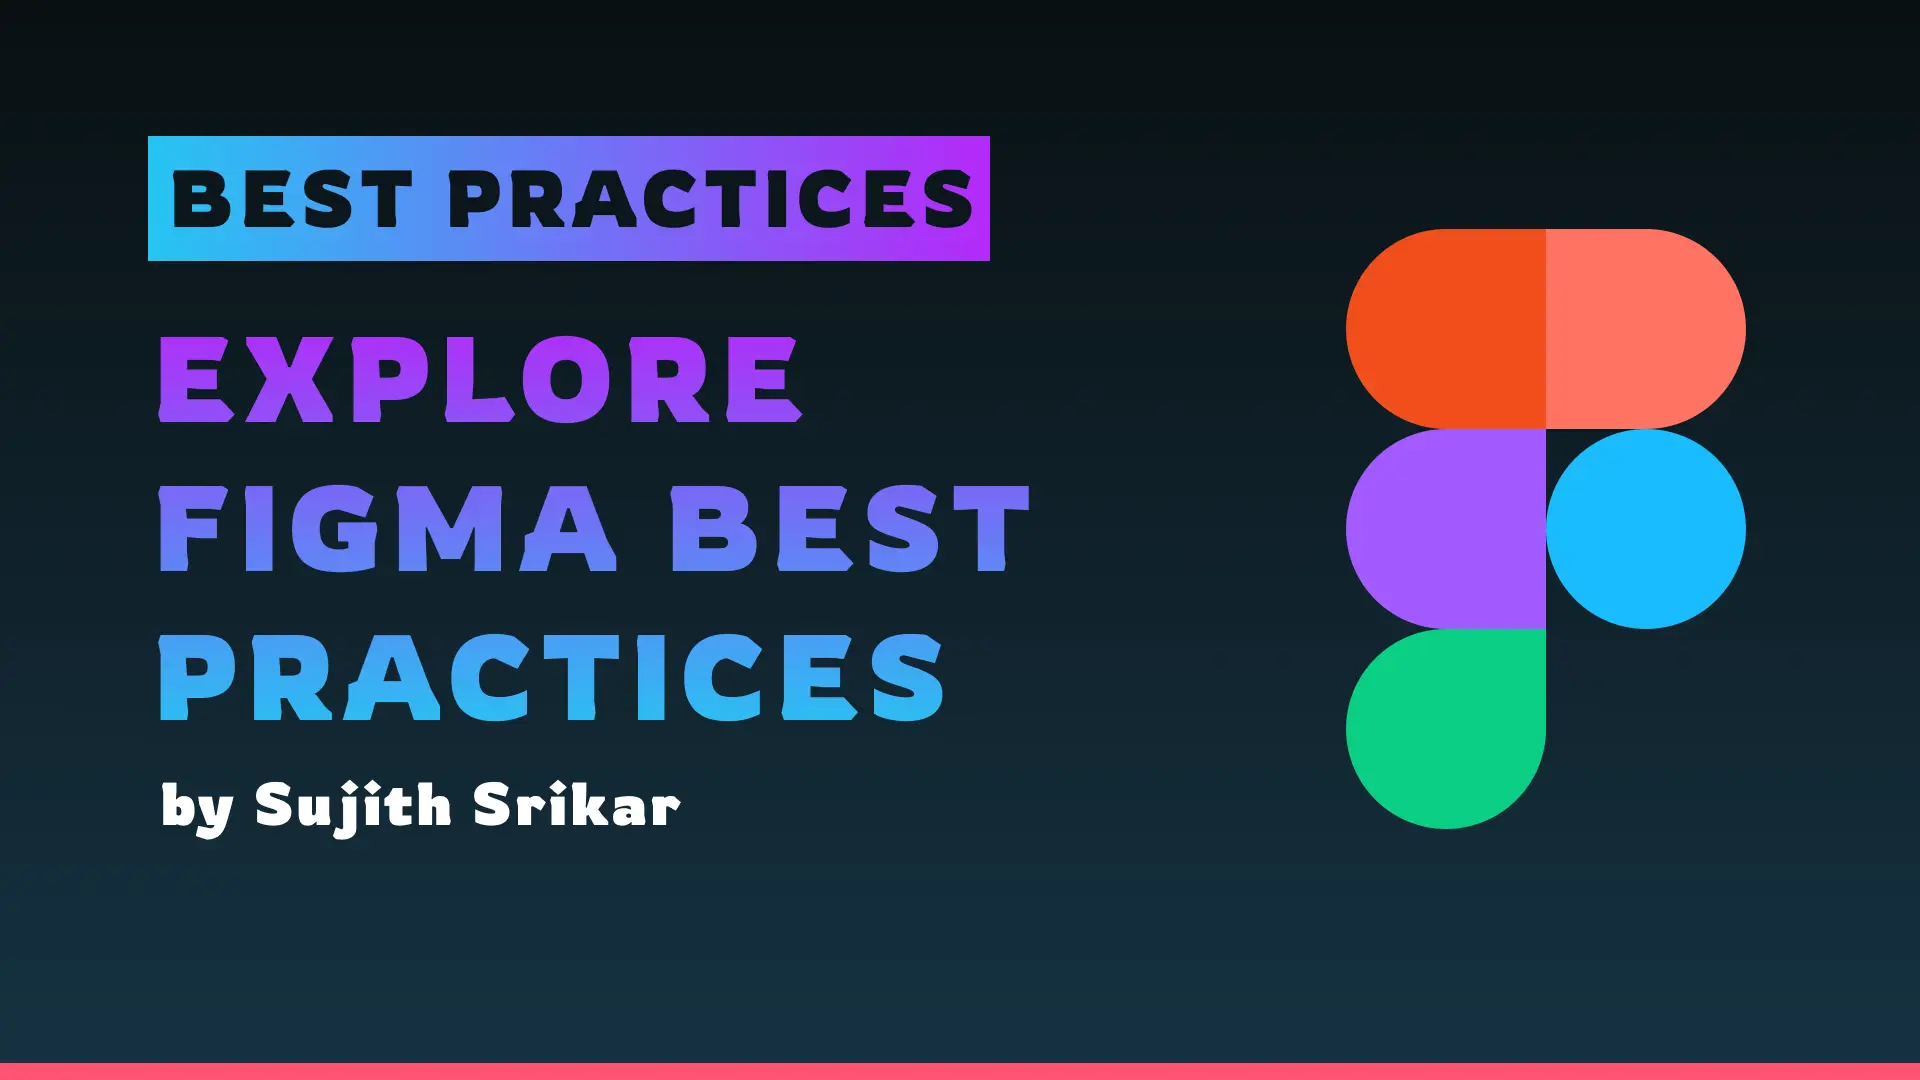 Figma Best Practices